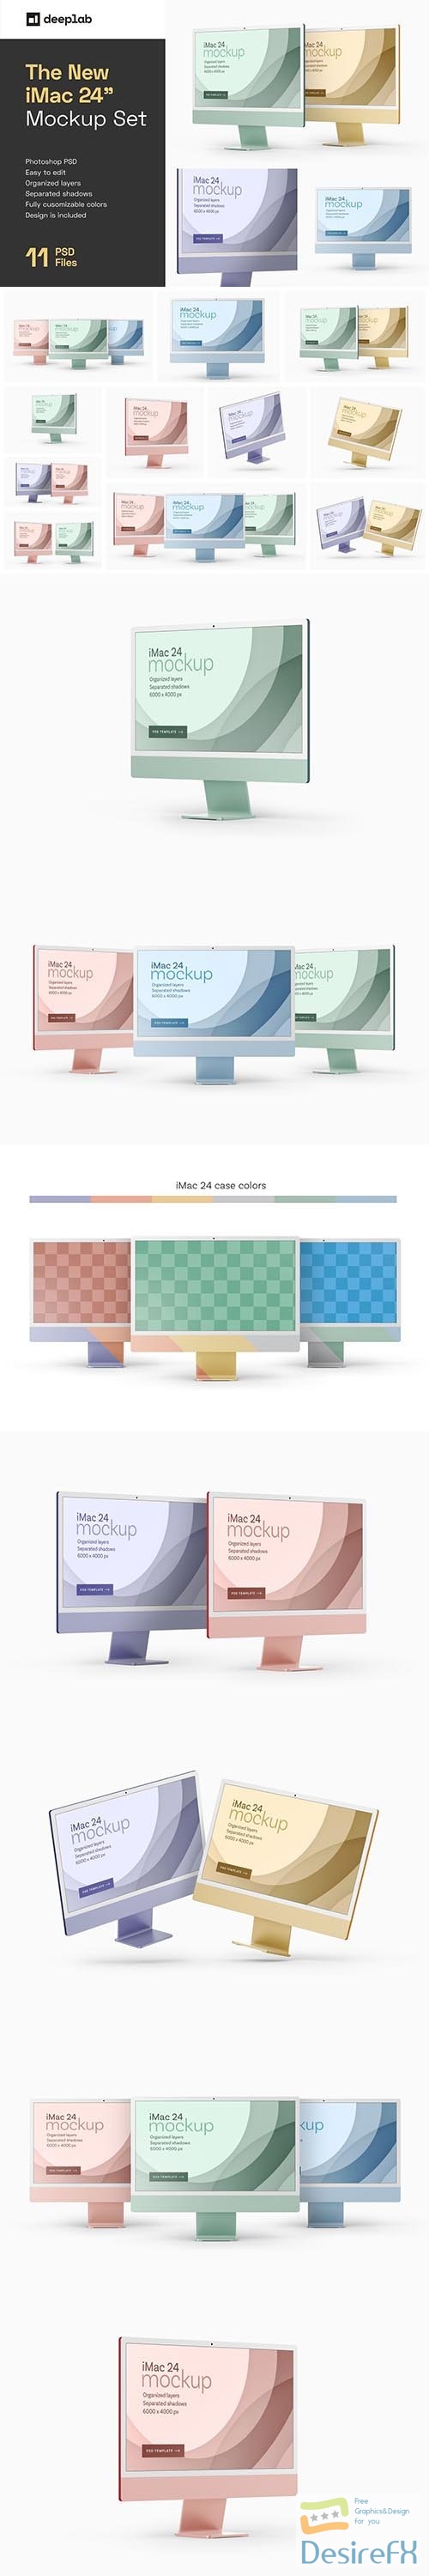 CreativeMarket - The New iMac 24” Mockup Set | 2021 6103240